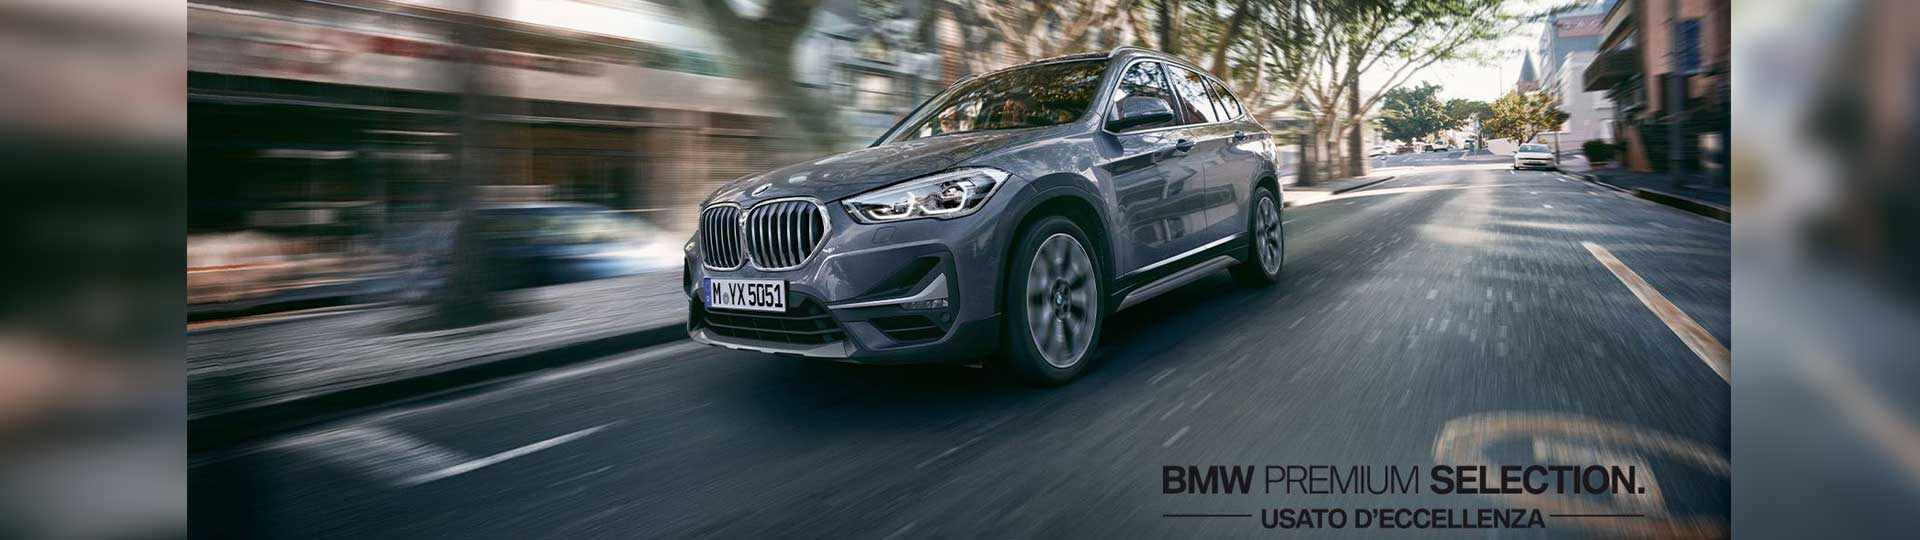 BMW-Premium-Selection_48mesi_novembre-2020-min.jpg